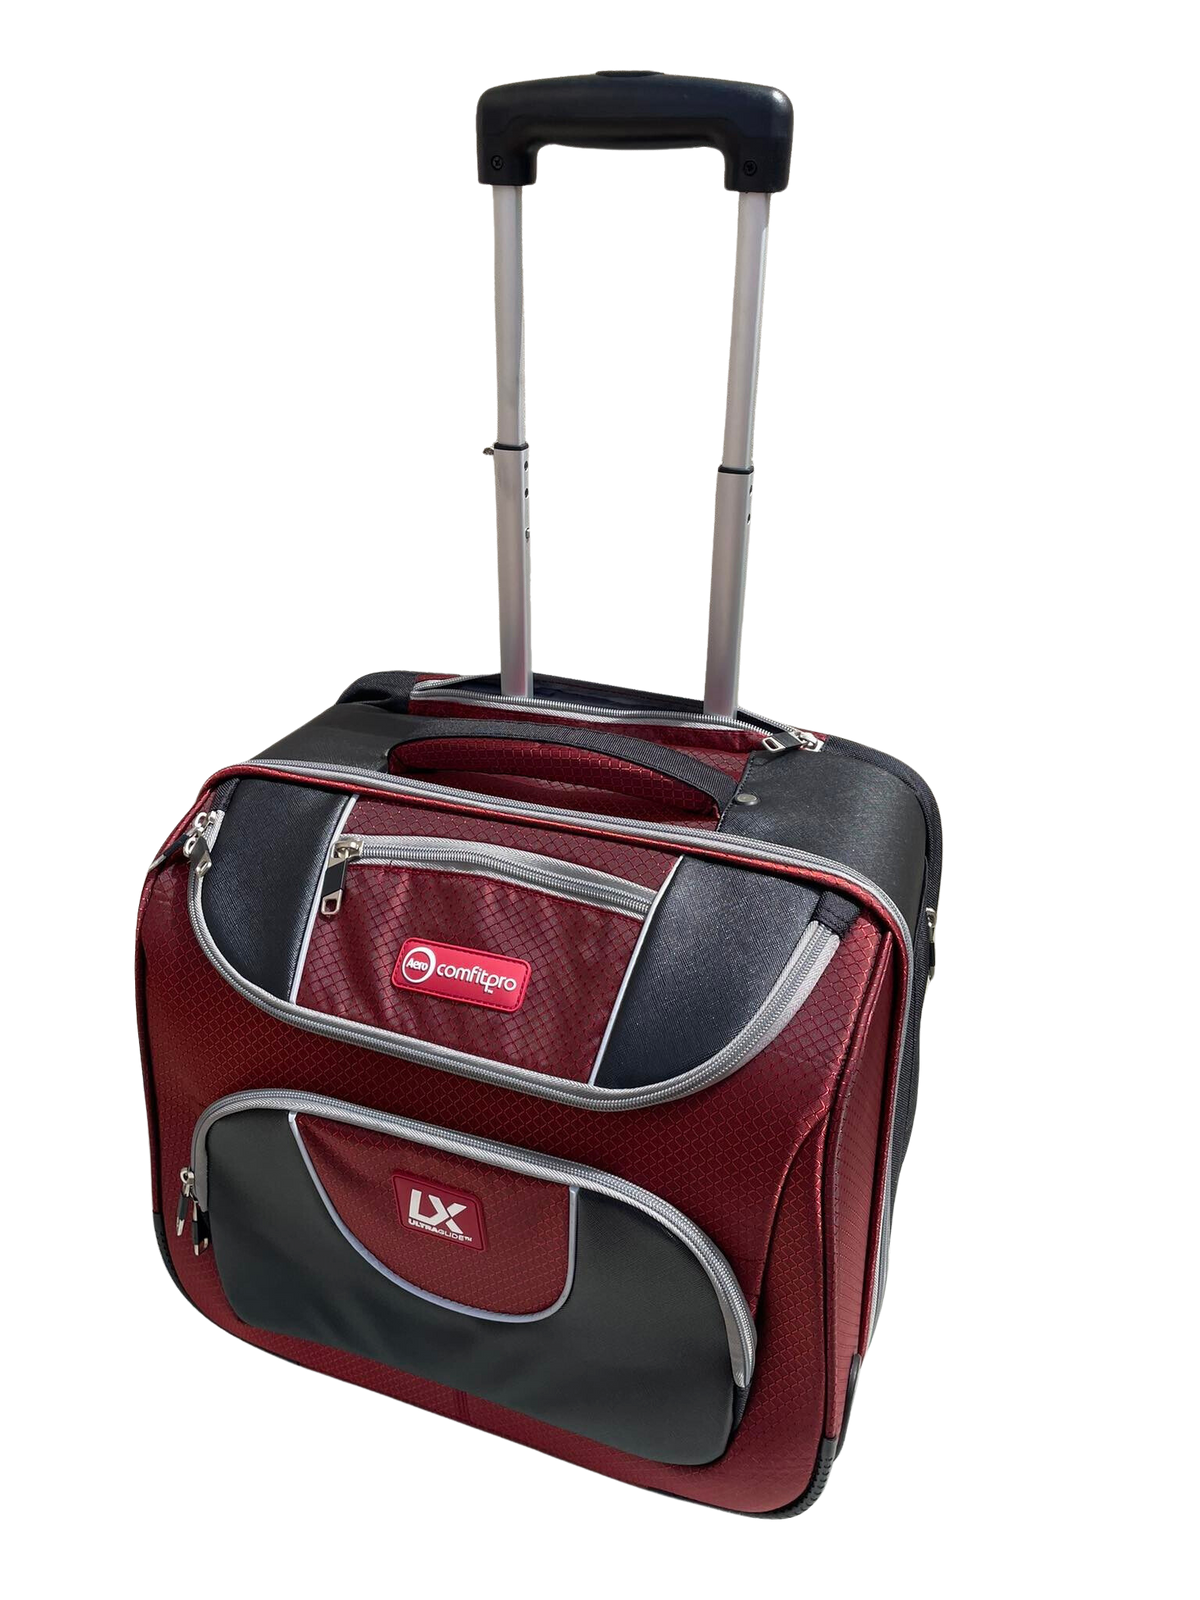 Aero LX Ultraglide Bag - Maroon